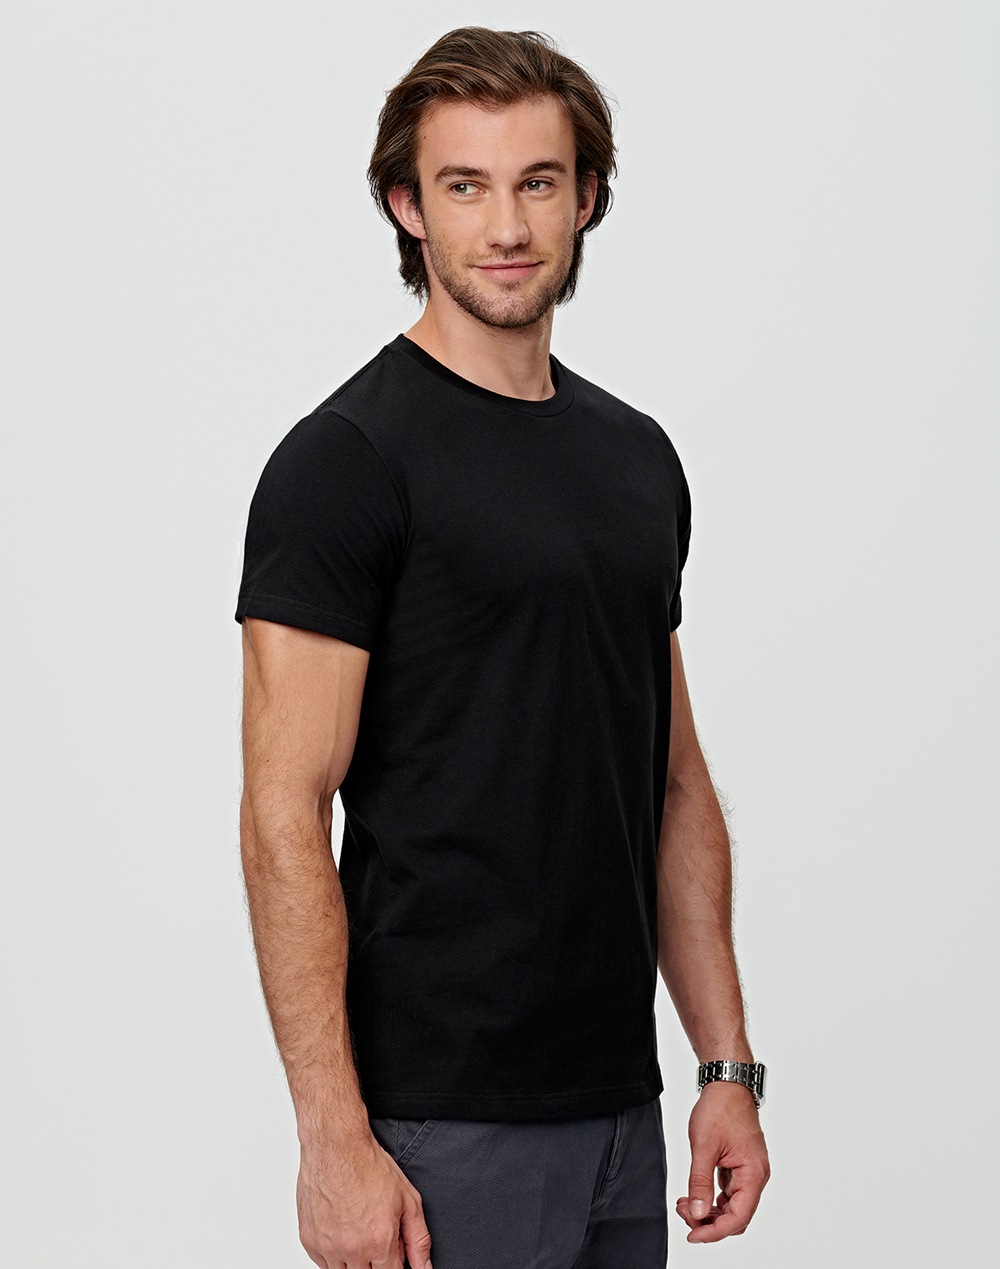 Custom Printed Premium T-Shirts Men's Side Seamed Online in Perth Australia